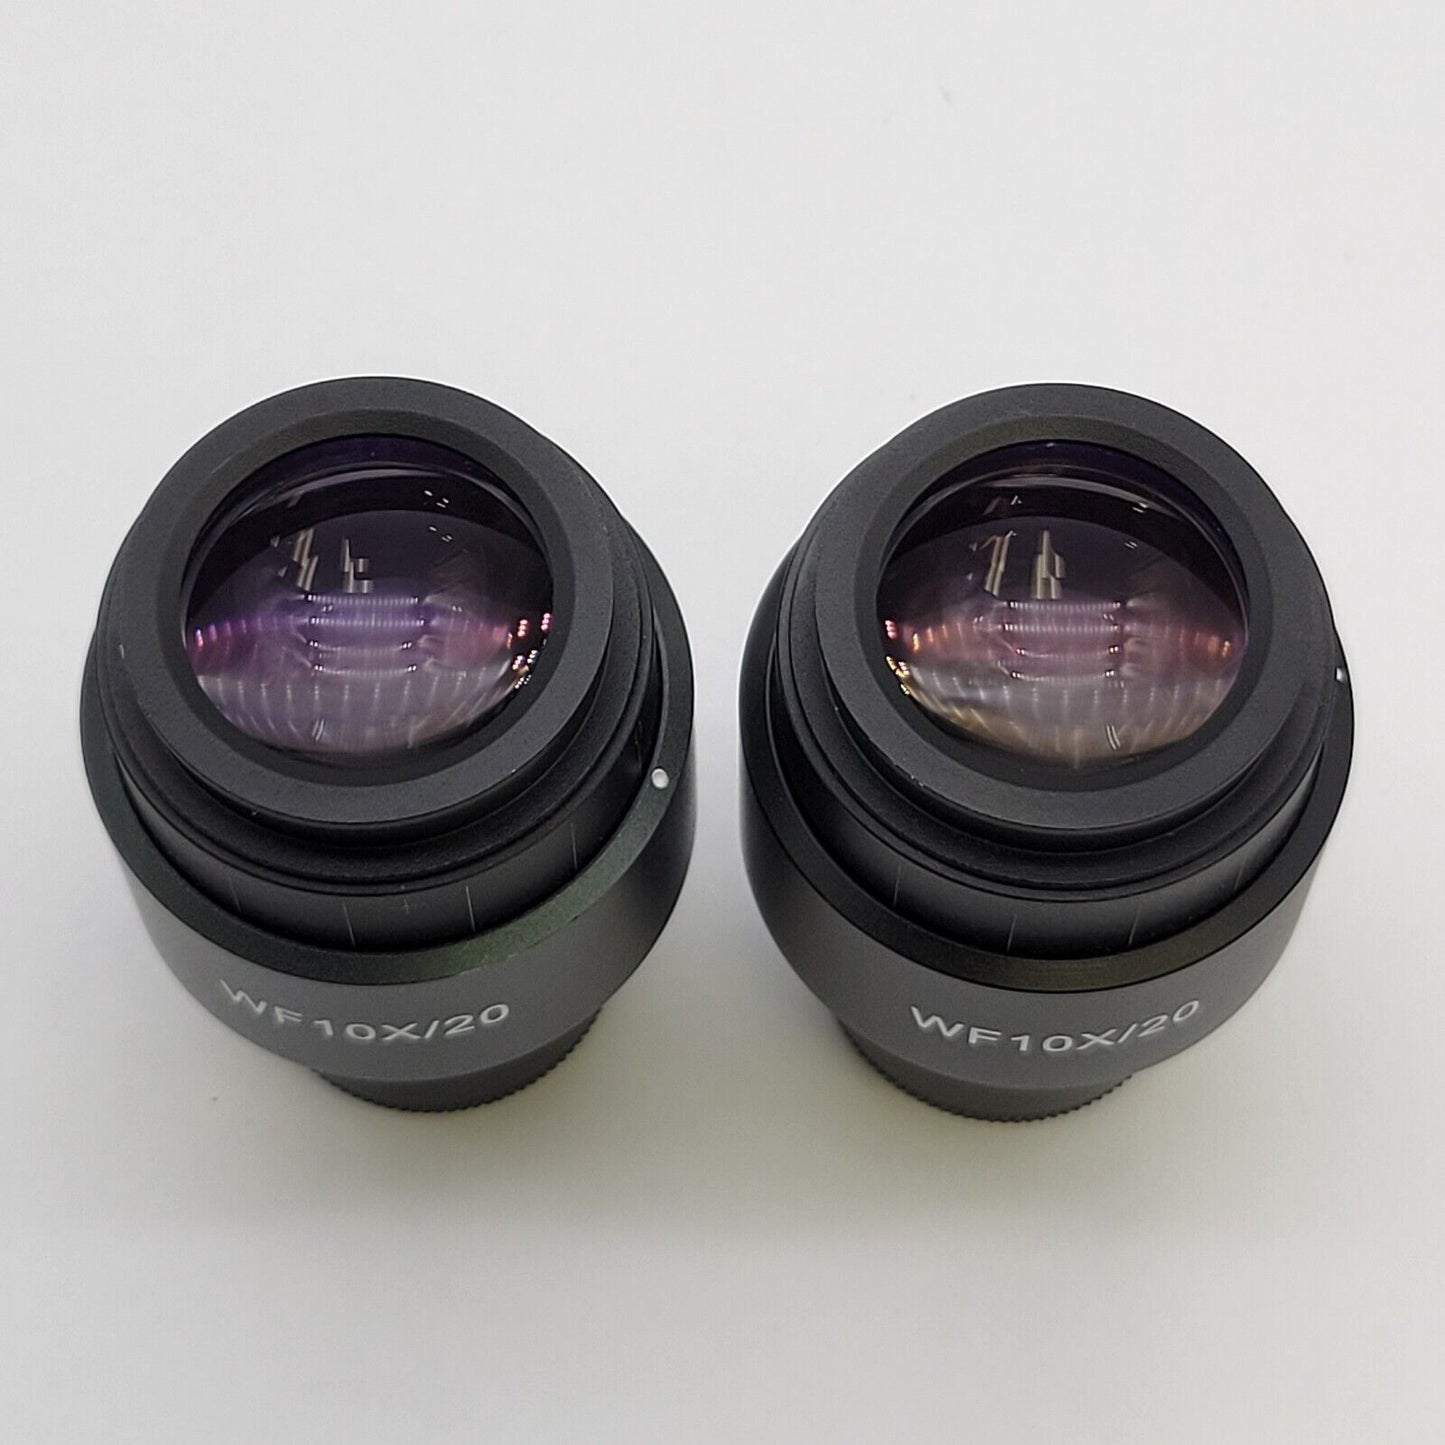 Zeiss Microscope Eyepiece Pair WF 10x/20 Primo 415500-1501-000 - microscopemarketplace